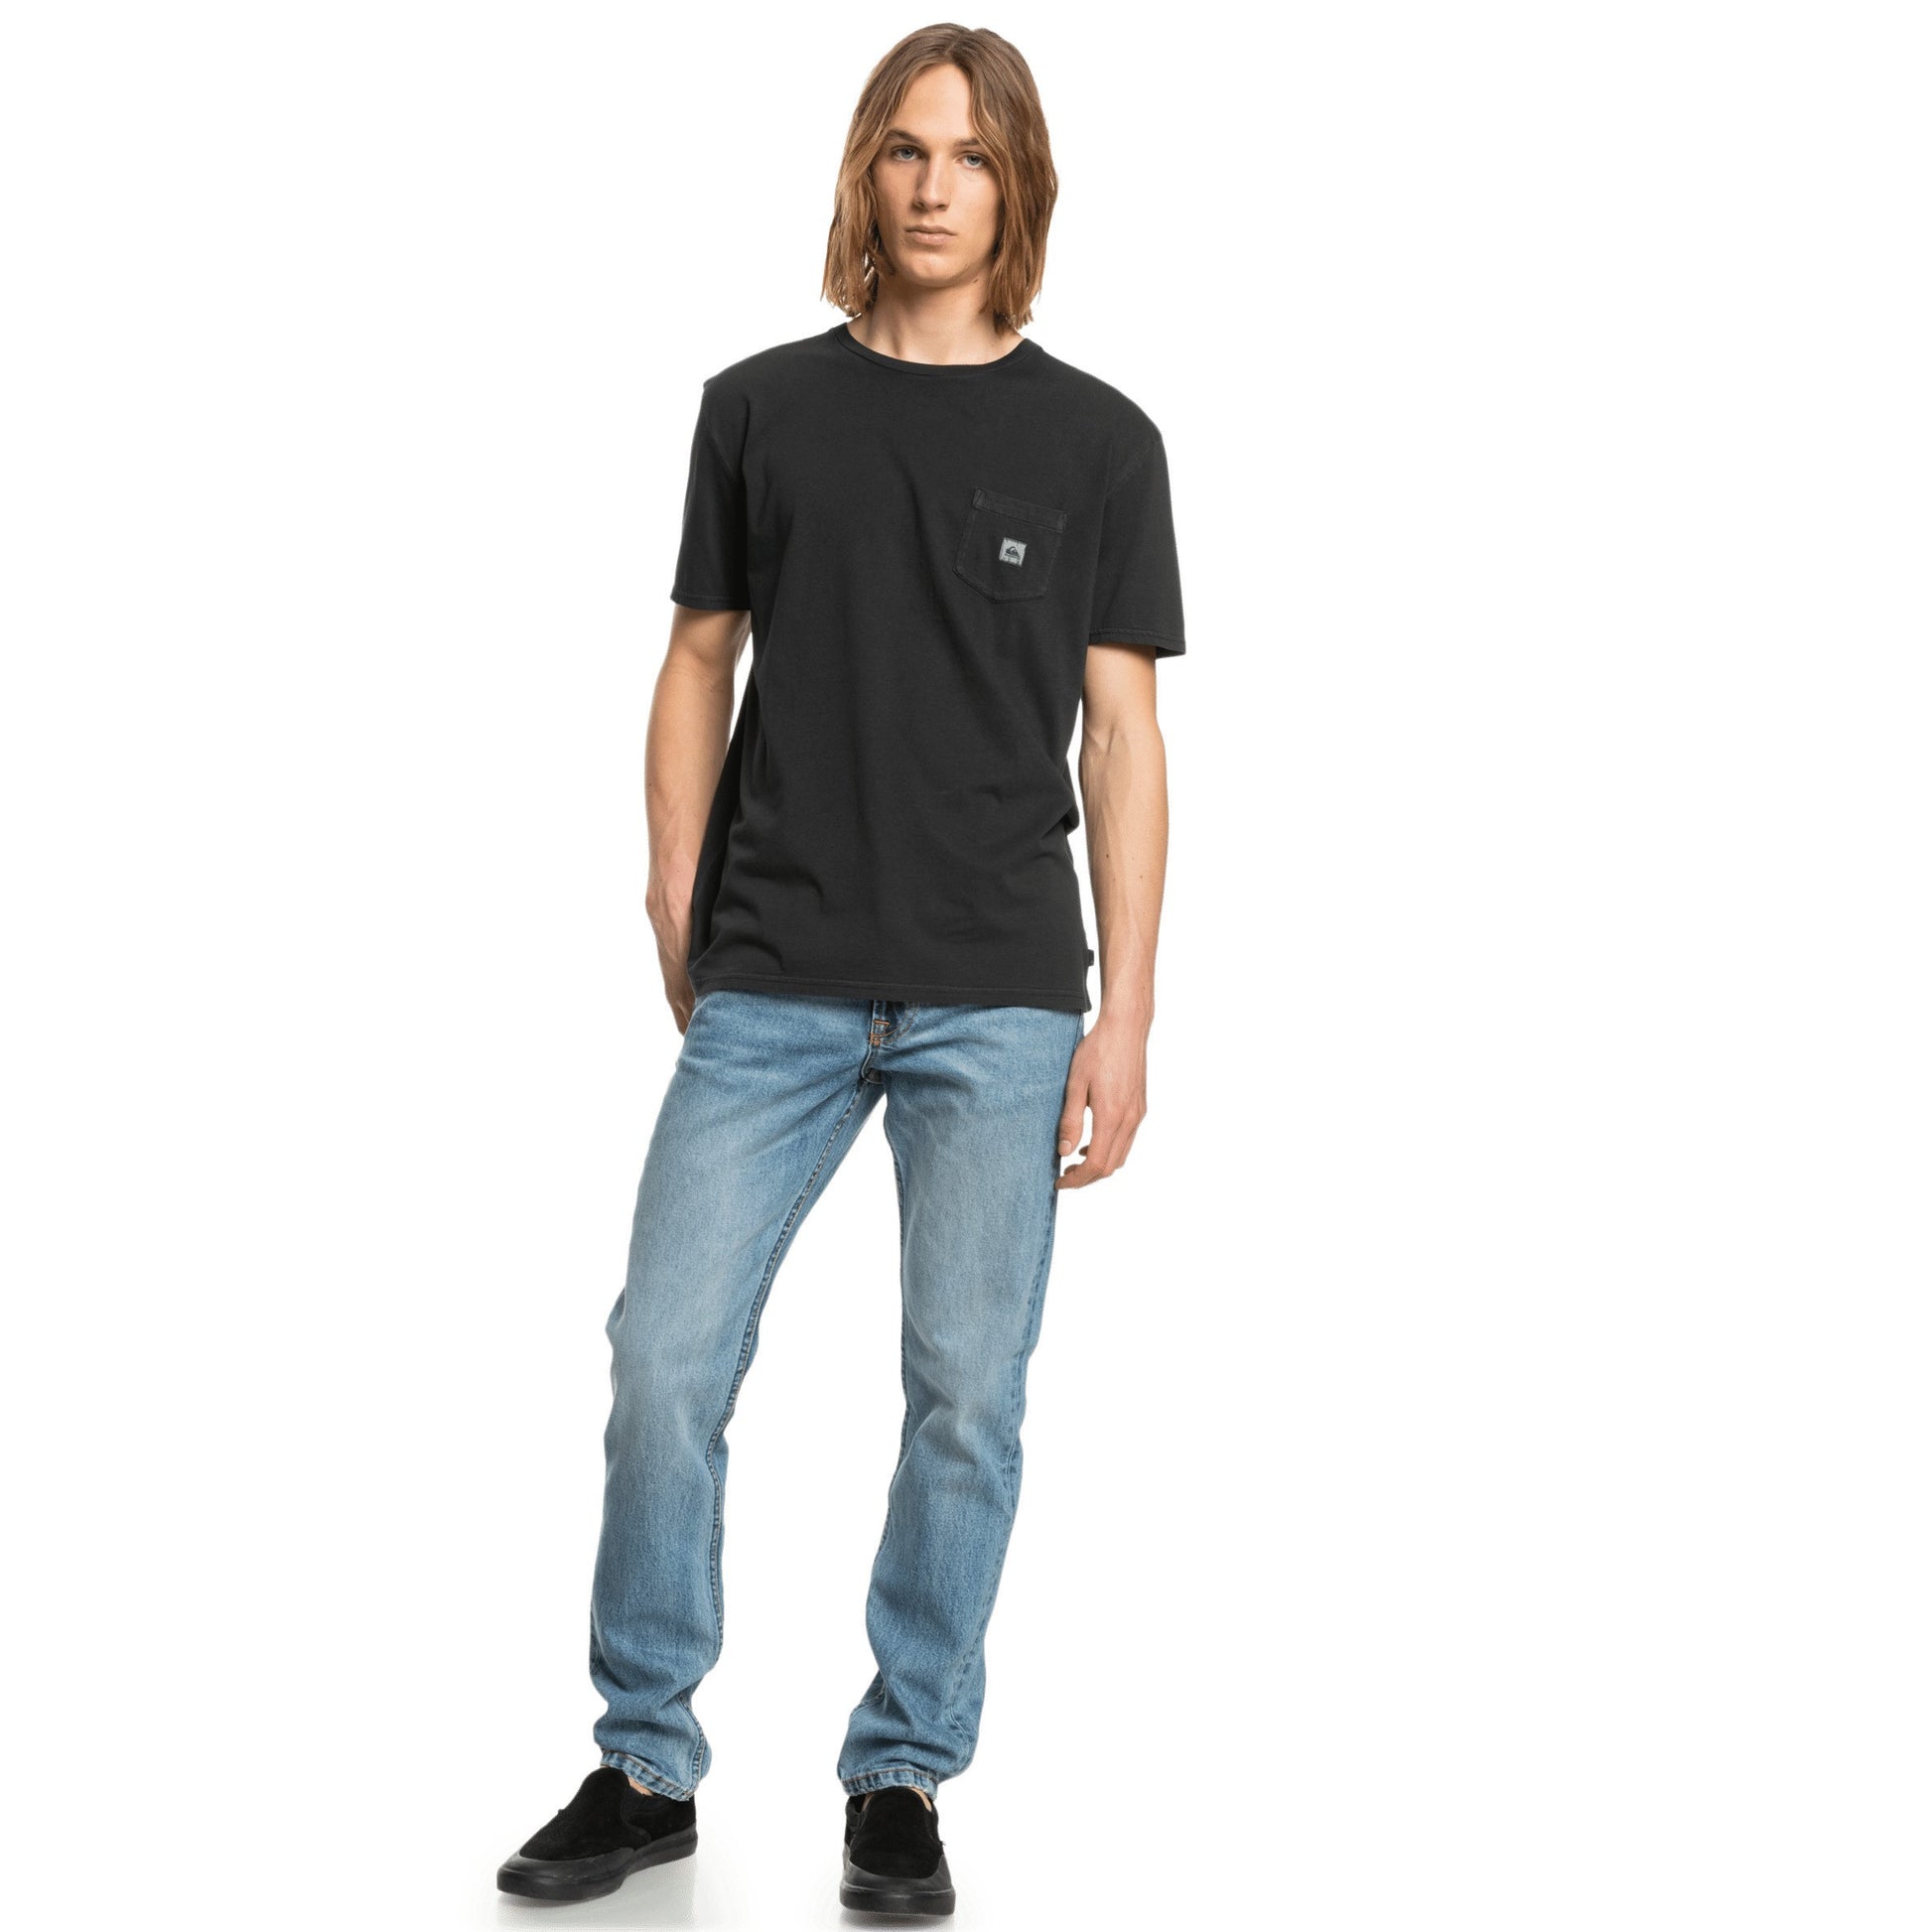 QUIKSILVER Modern Wave Salt Water - Jeans vestibilità straight da Uomo